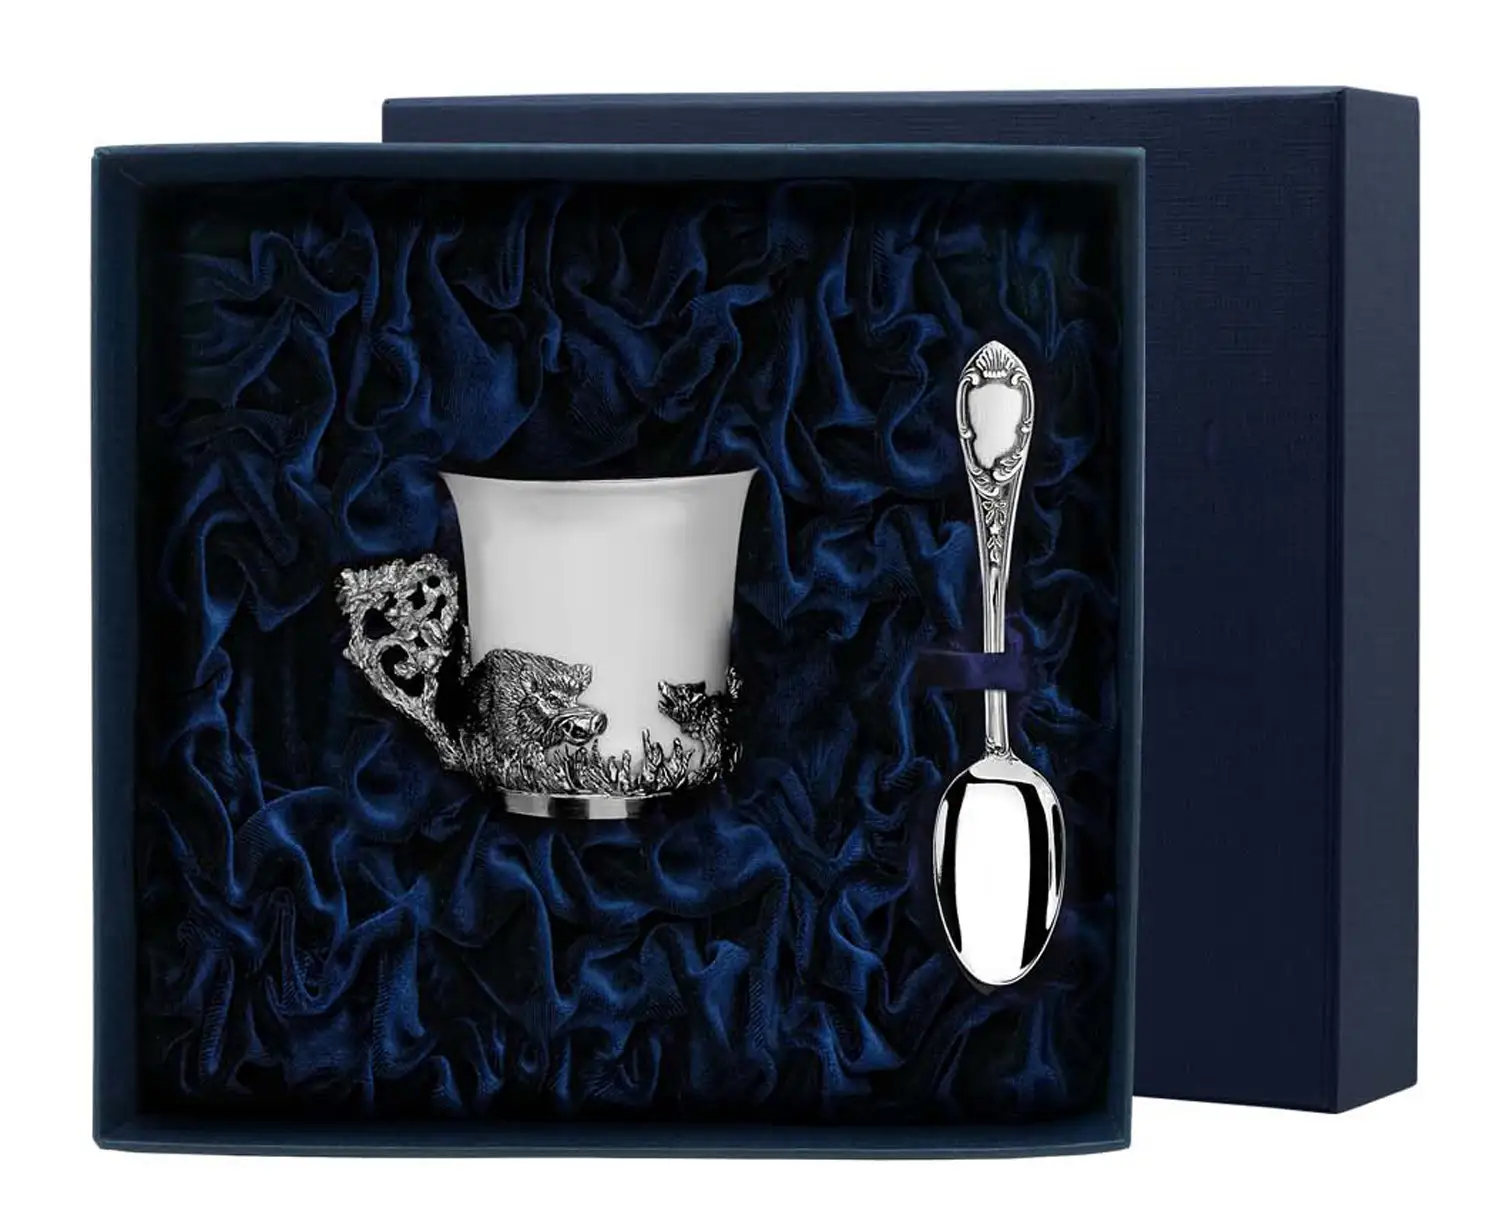 Набор кофейная чашка Кабан: ложка, чашка (Серебро 925) набор чашка кофейная листопад ложка 2 предмета